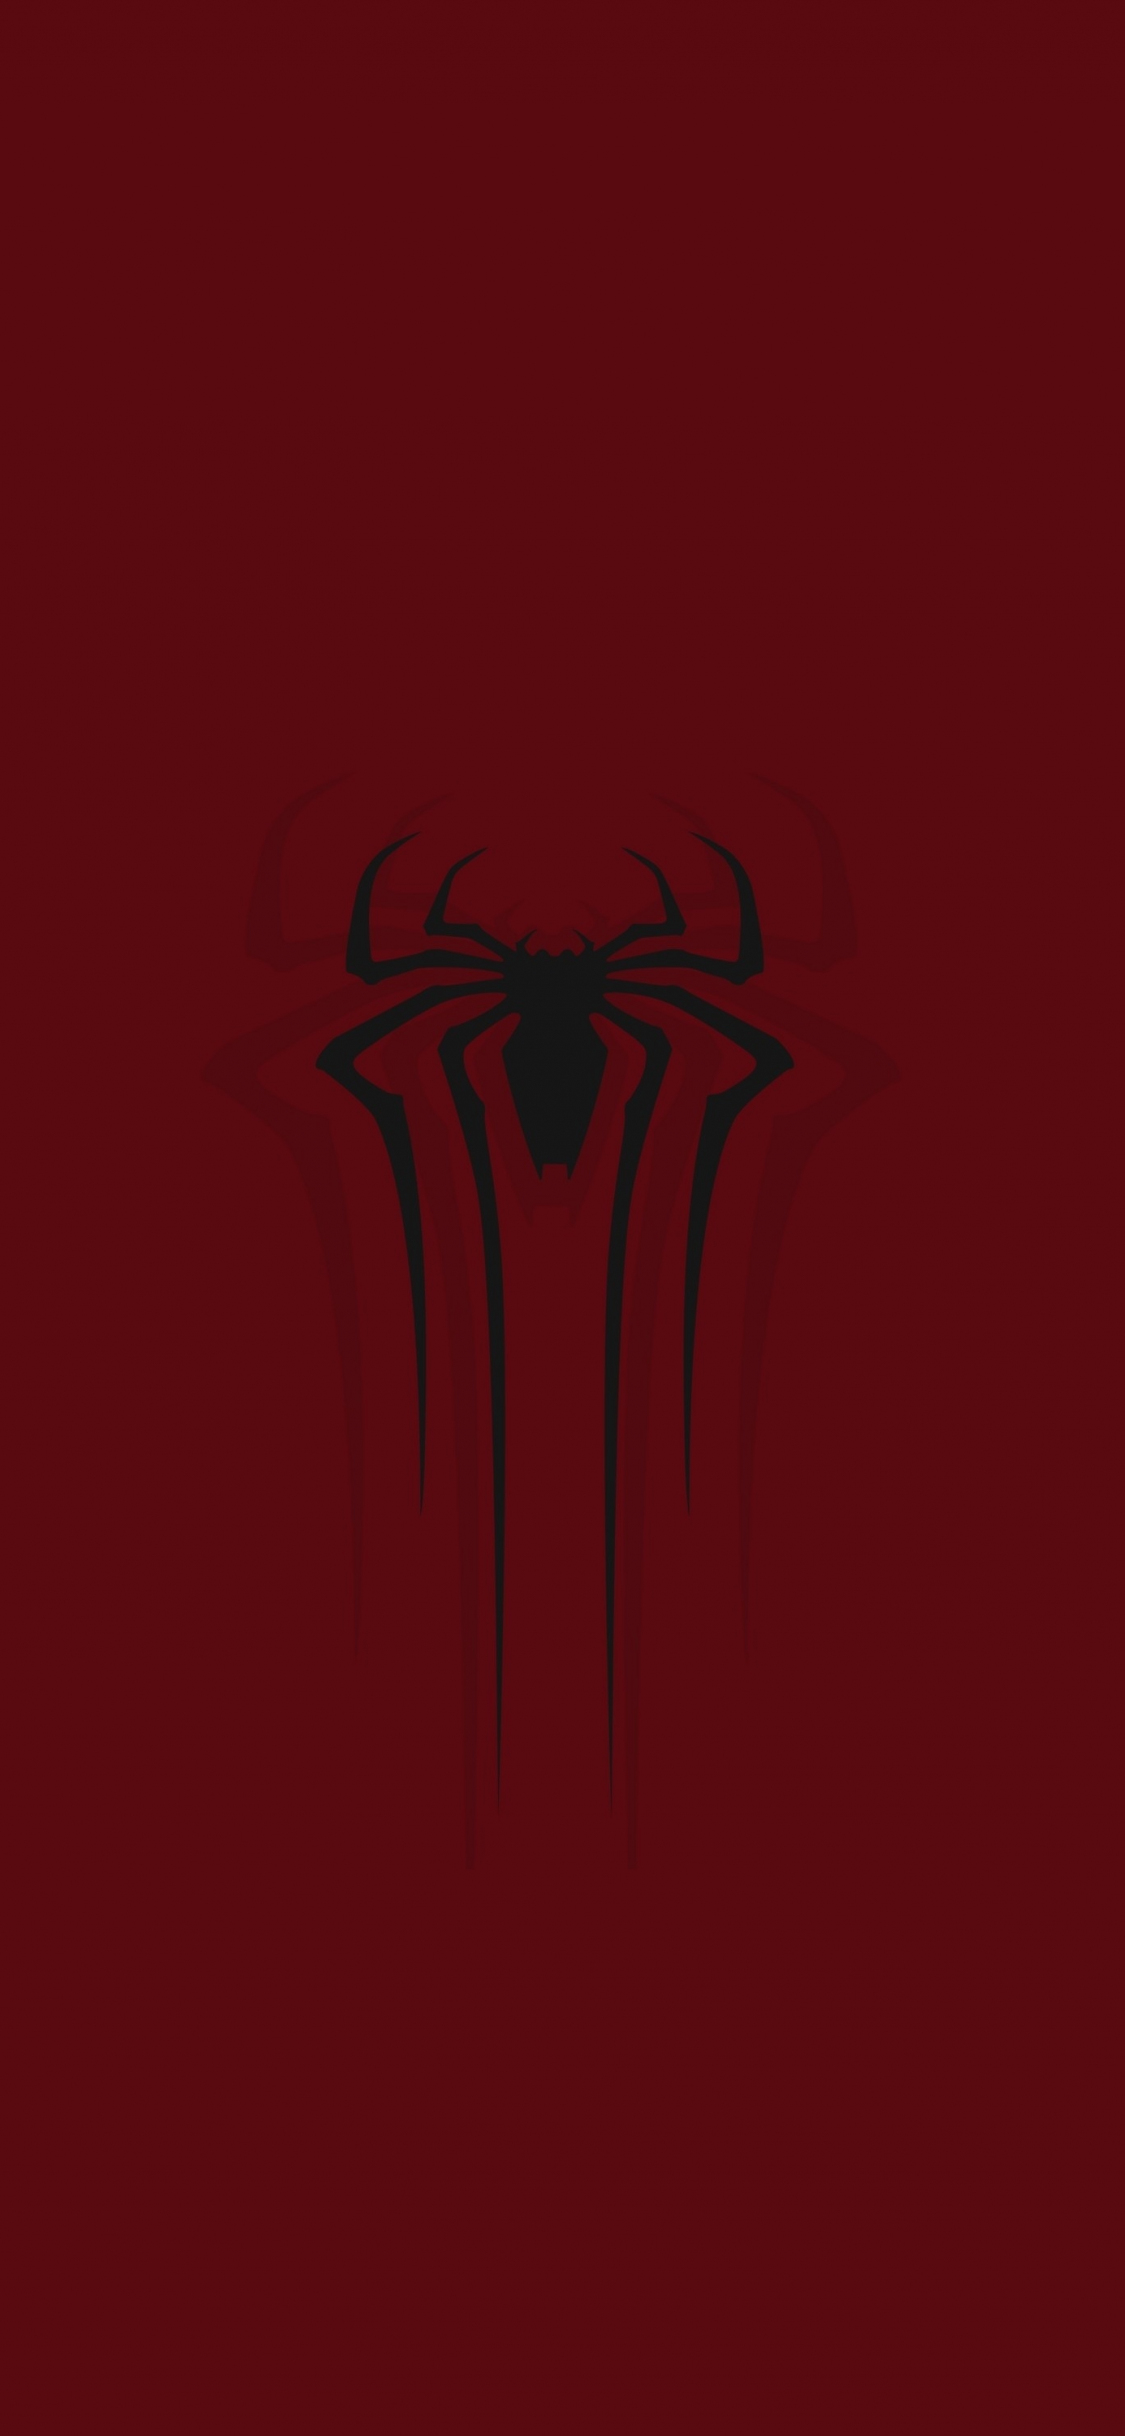 Black Ops 3 - How to make Black Spiderman Emblem | Easy Tutorial - YouTube